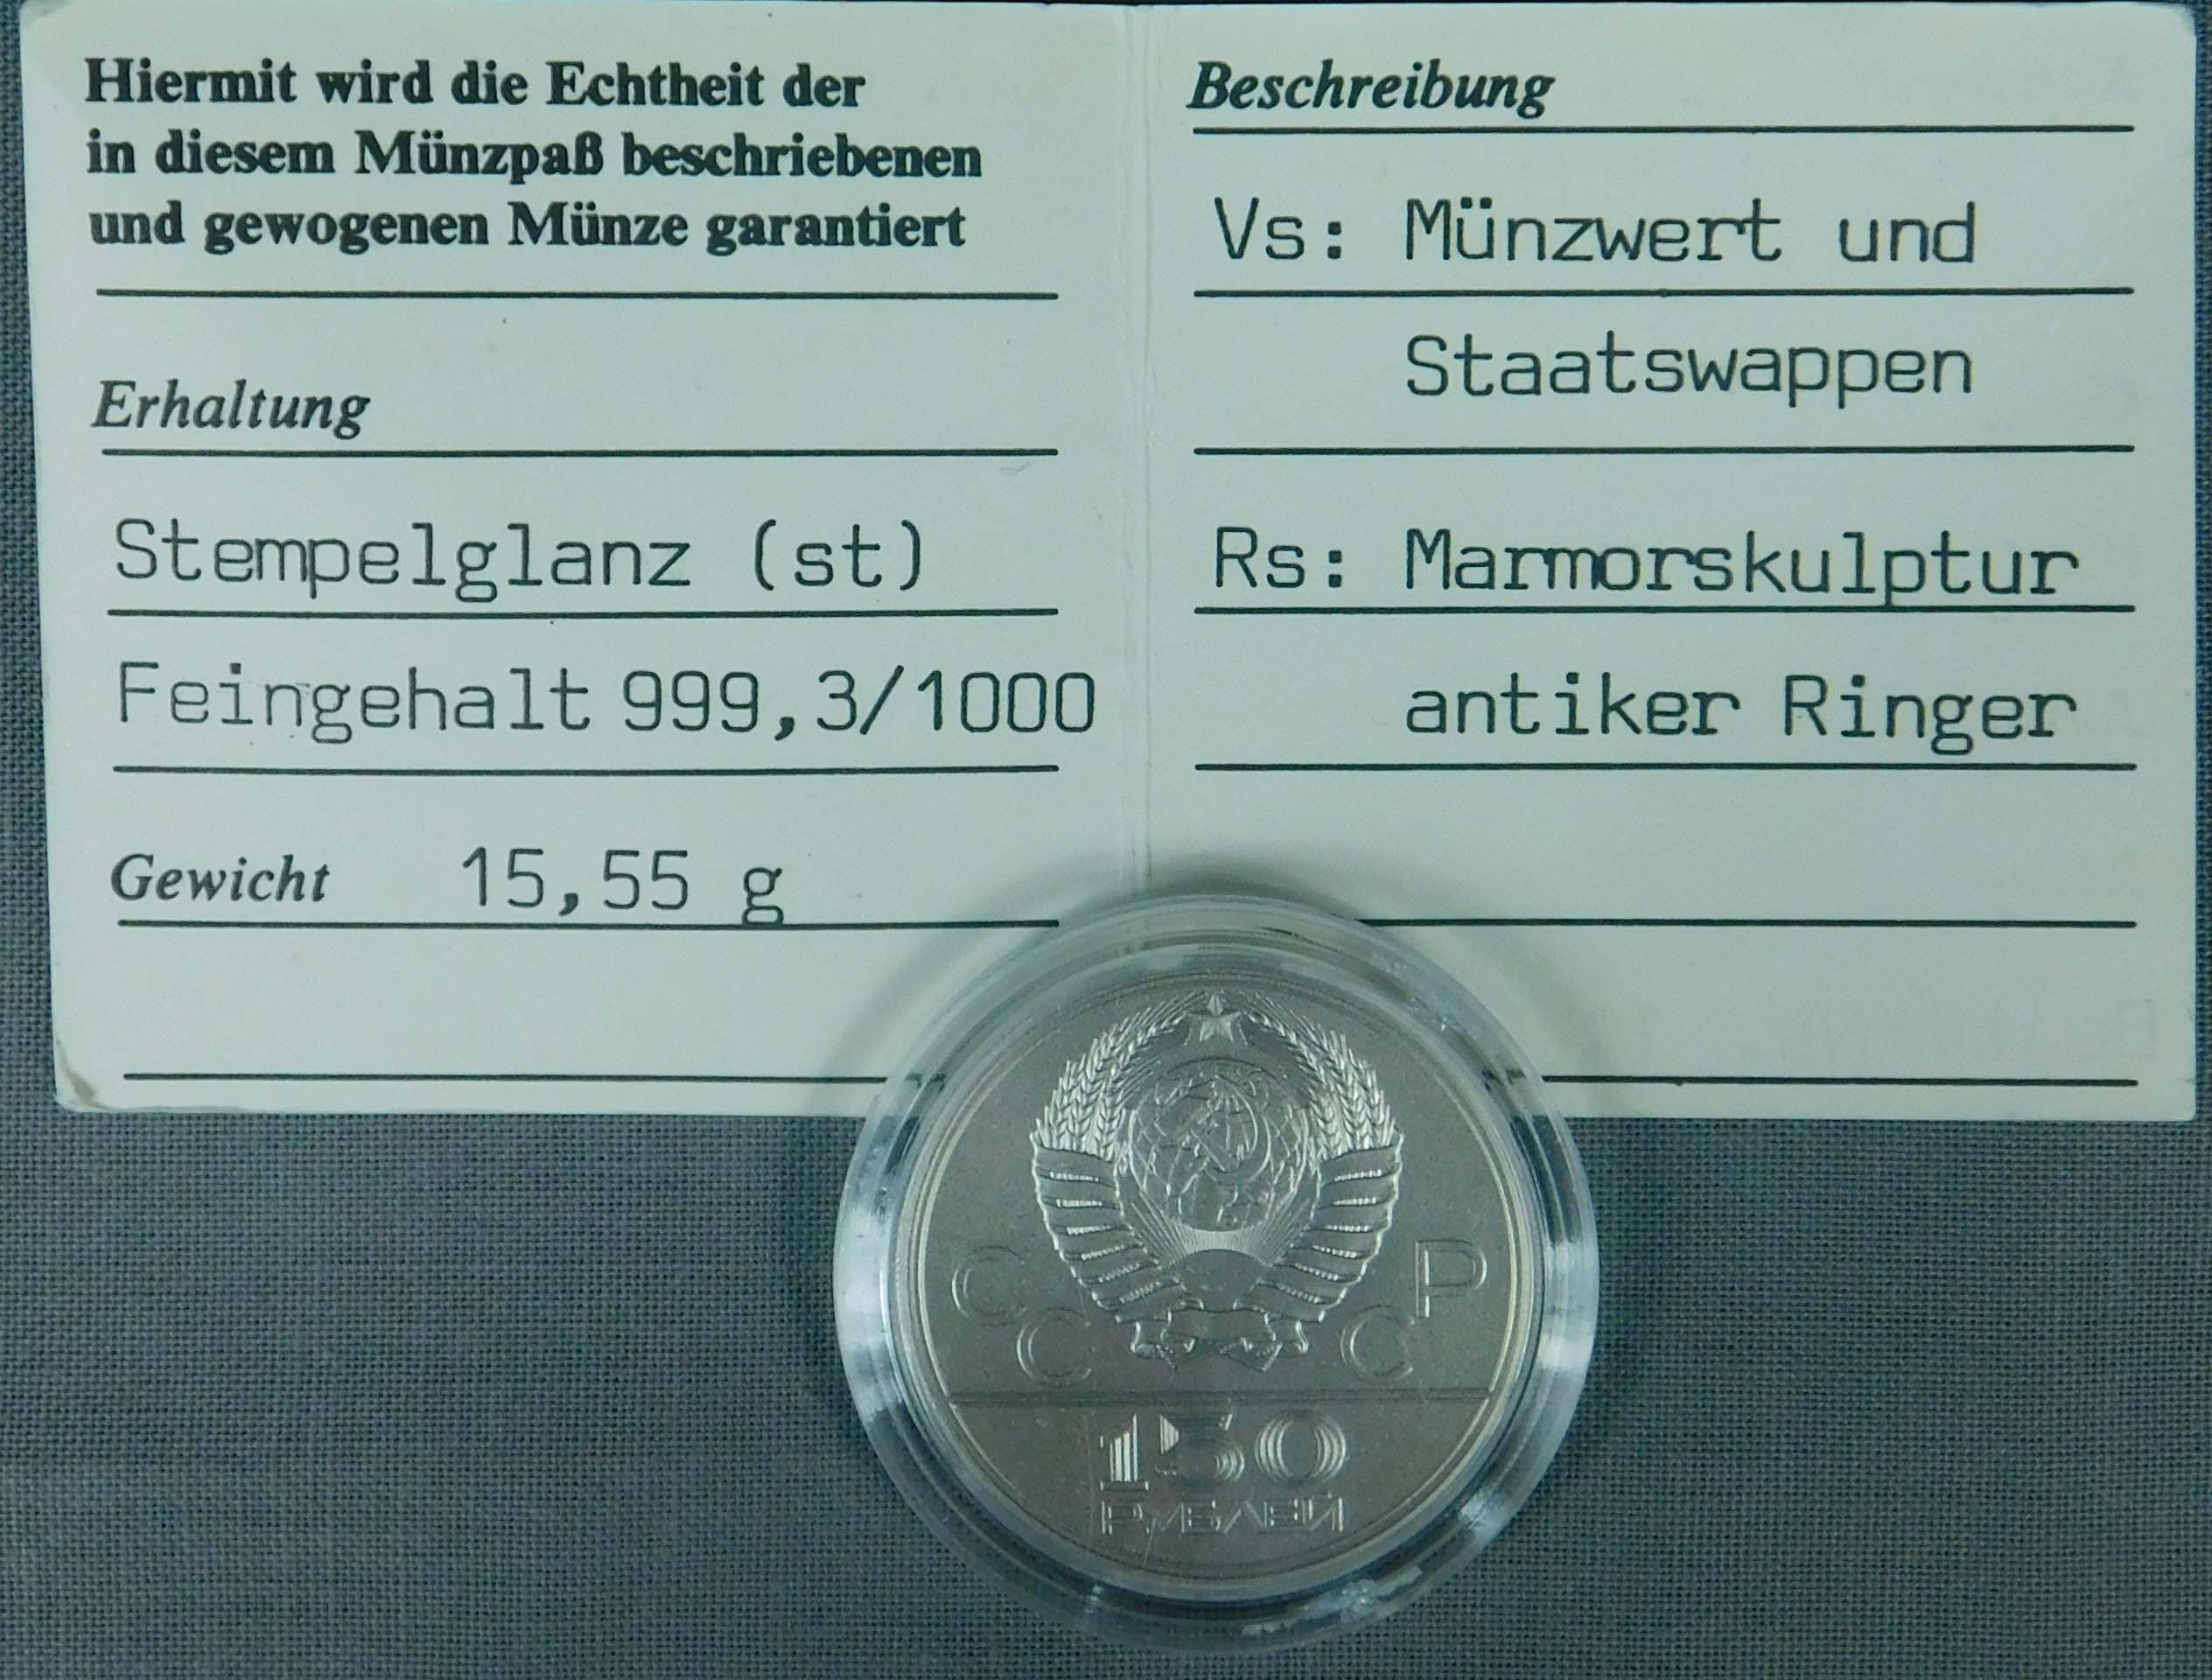 1 Platinmünze. 150 Rubel. Sowjetunion. 1979. - Image 3 of 5